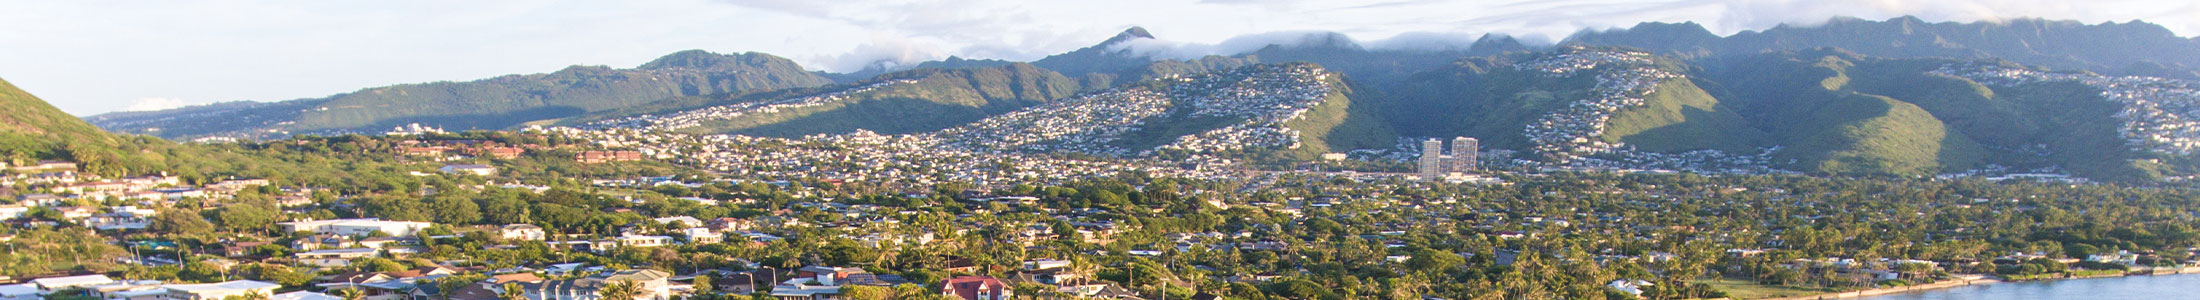 image of homes on Oahu